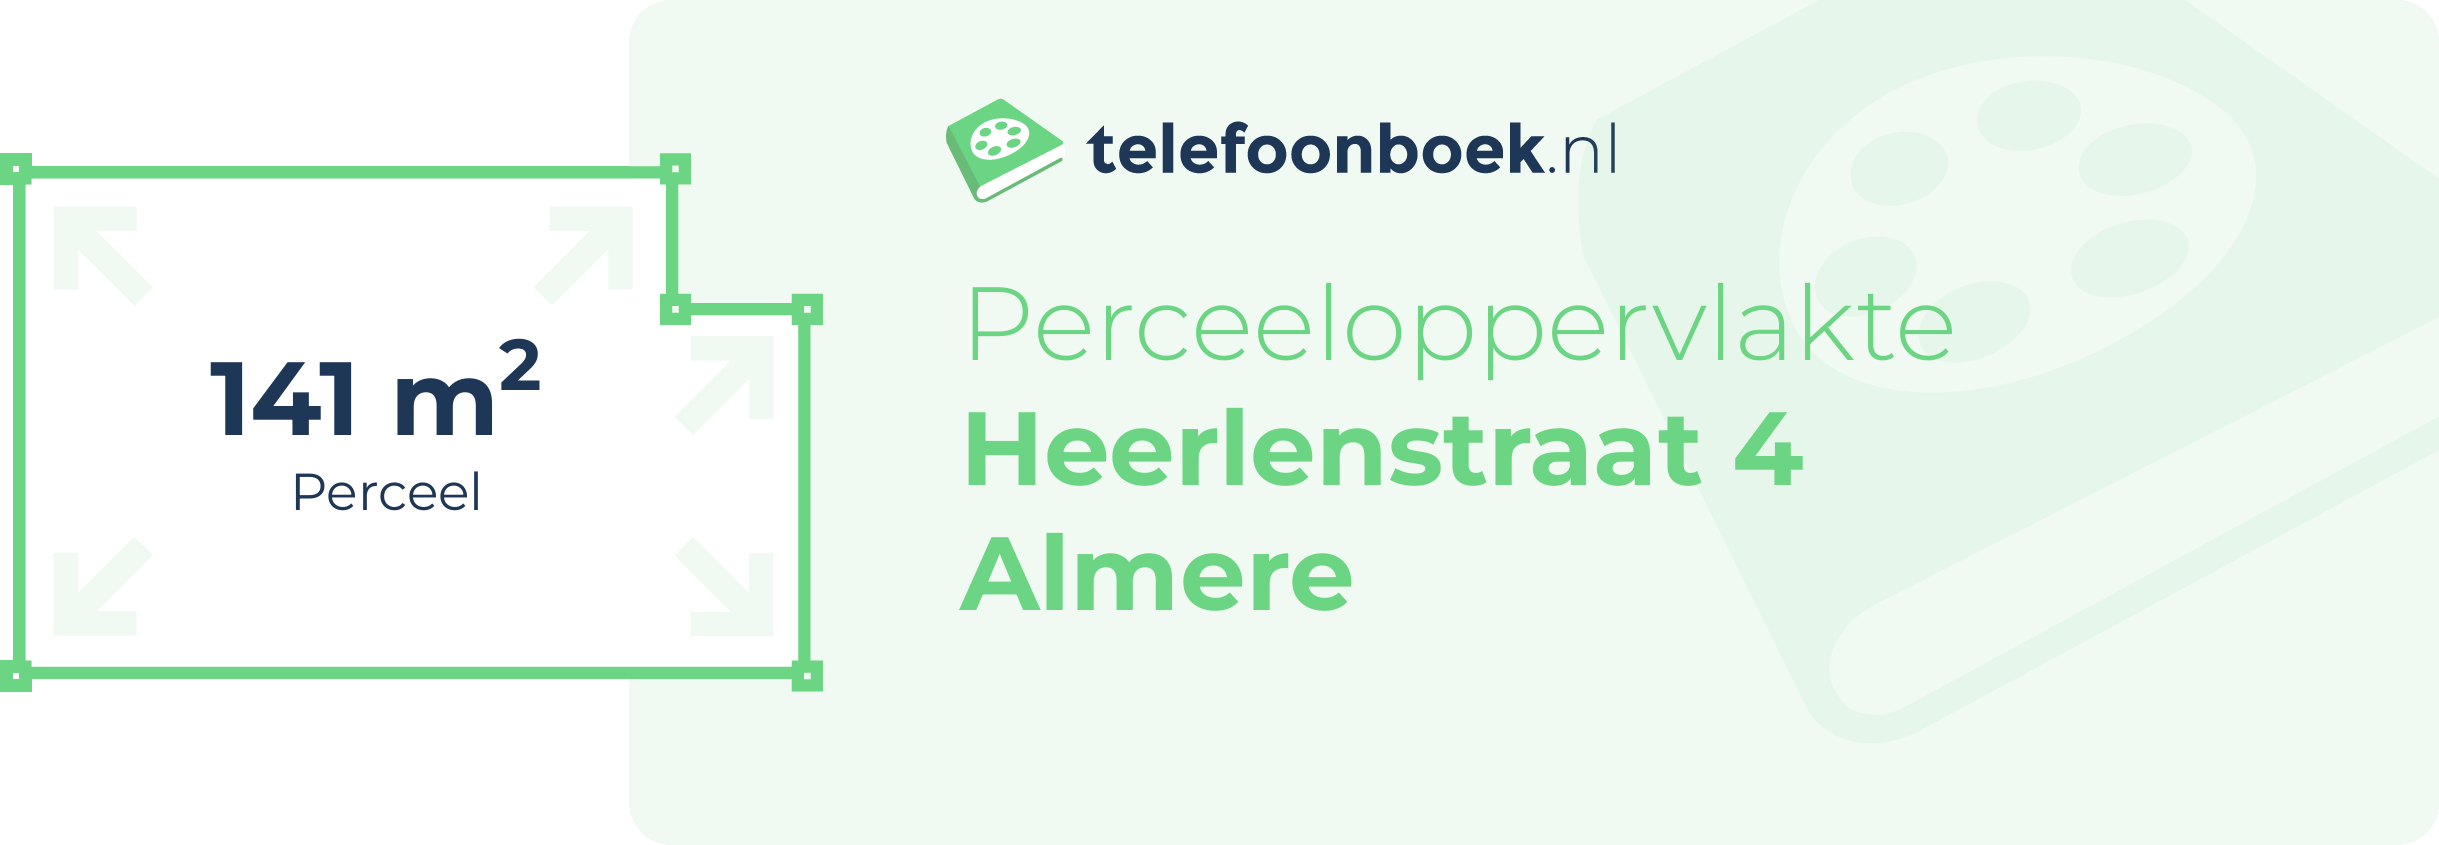 Perceeloppervlakte Heerlenstraat 4 Almere